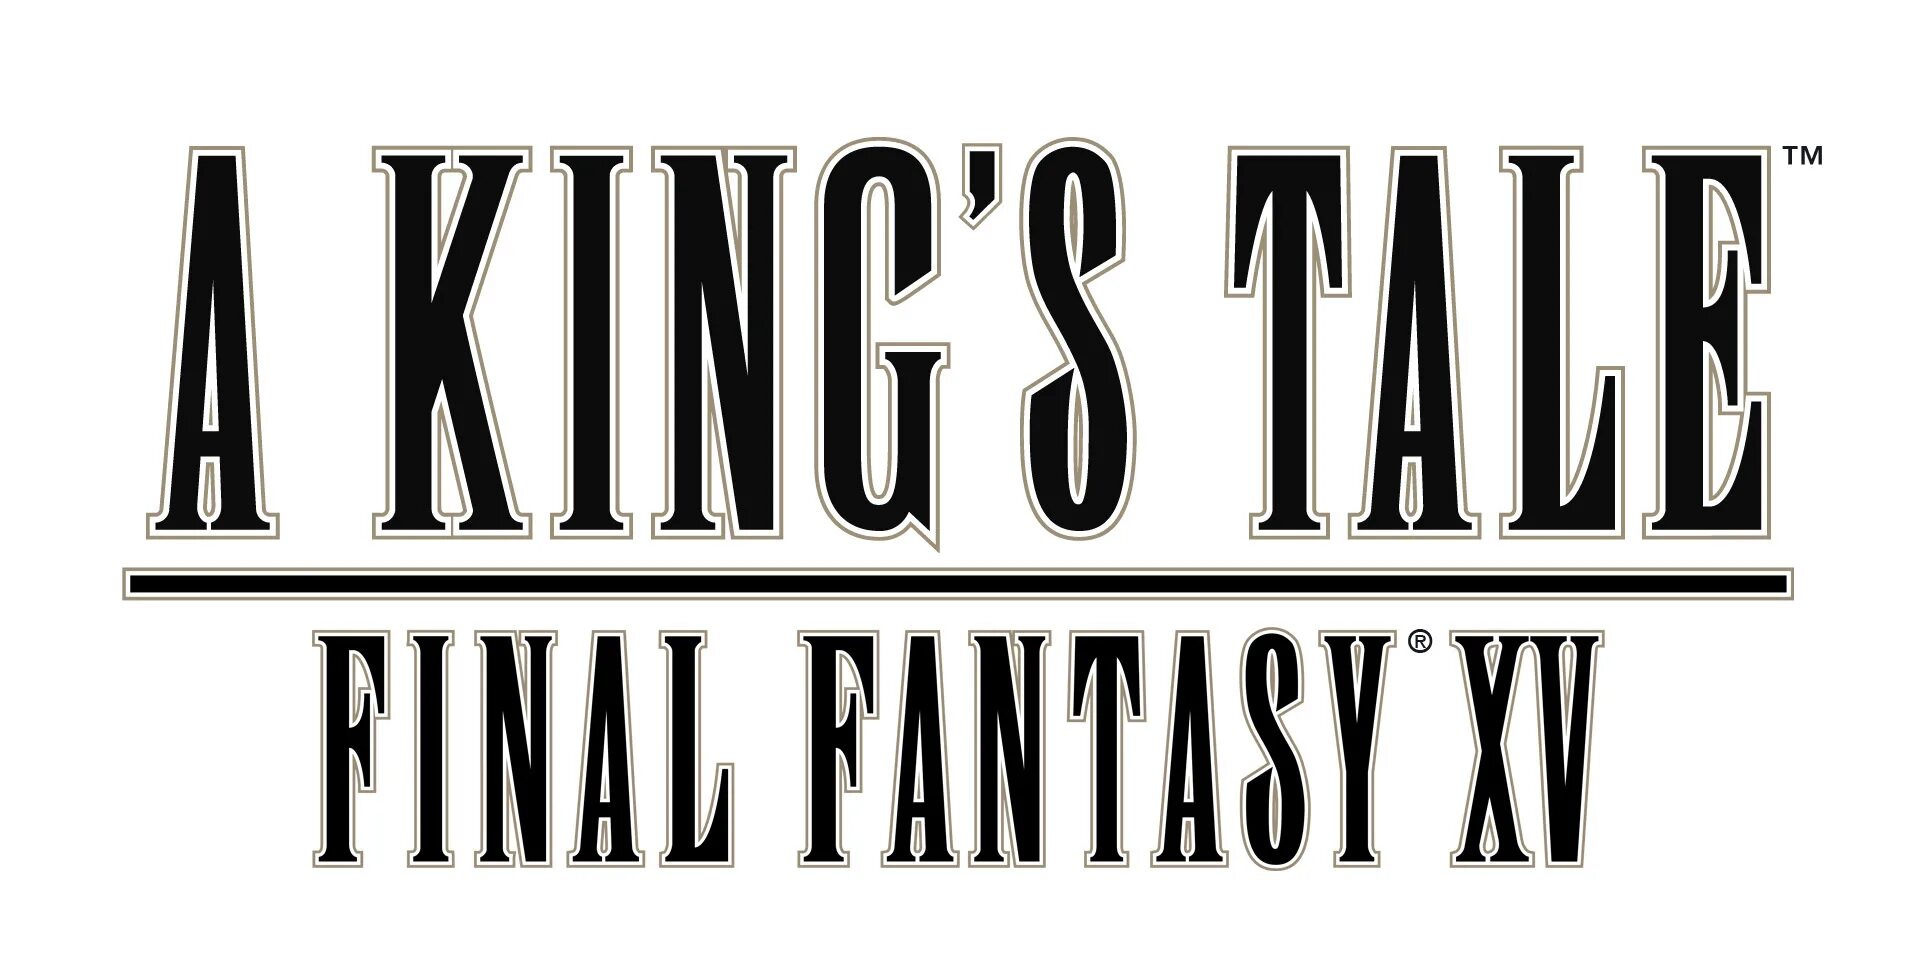 Final tale. A King's Tale: Final Fantasy XV. A King Tale Final Fantasy. Kings of Tale ff15. King’s Tale FF XV.